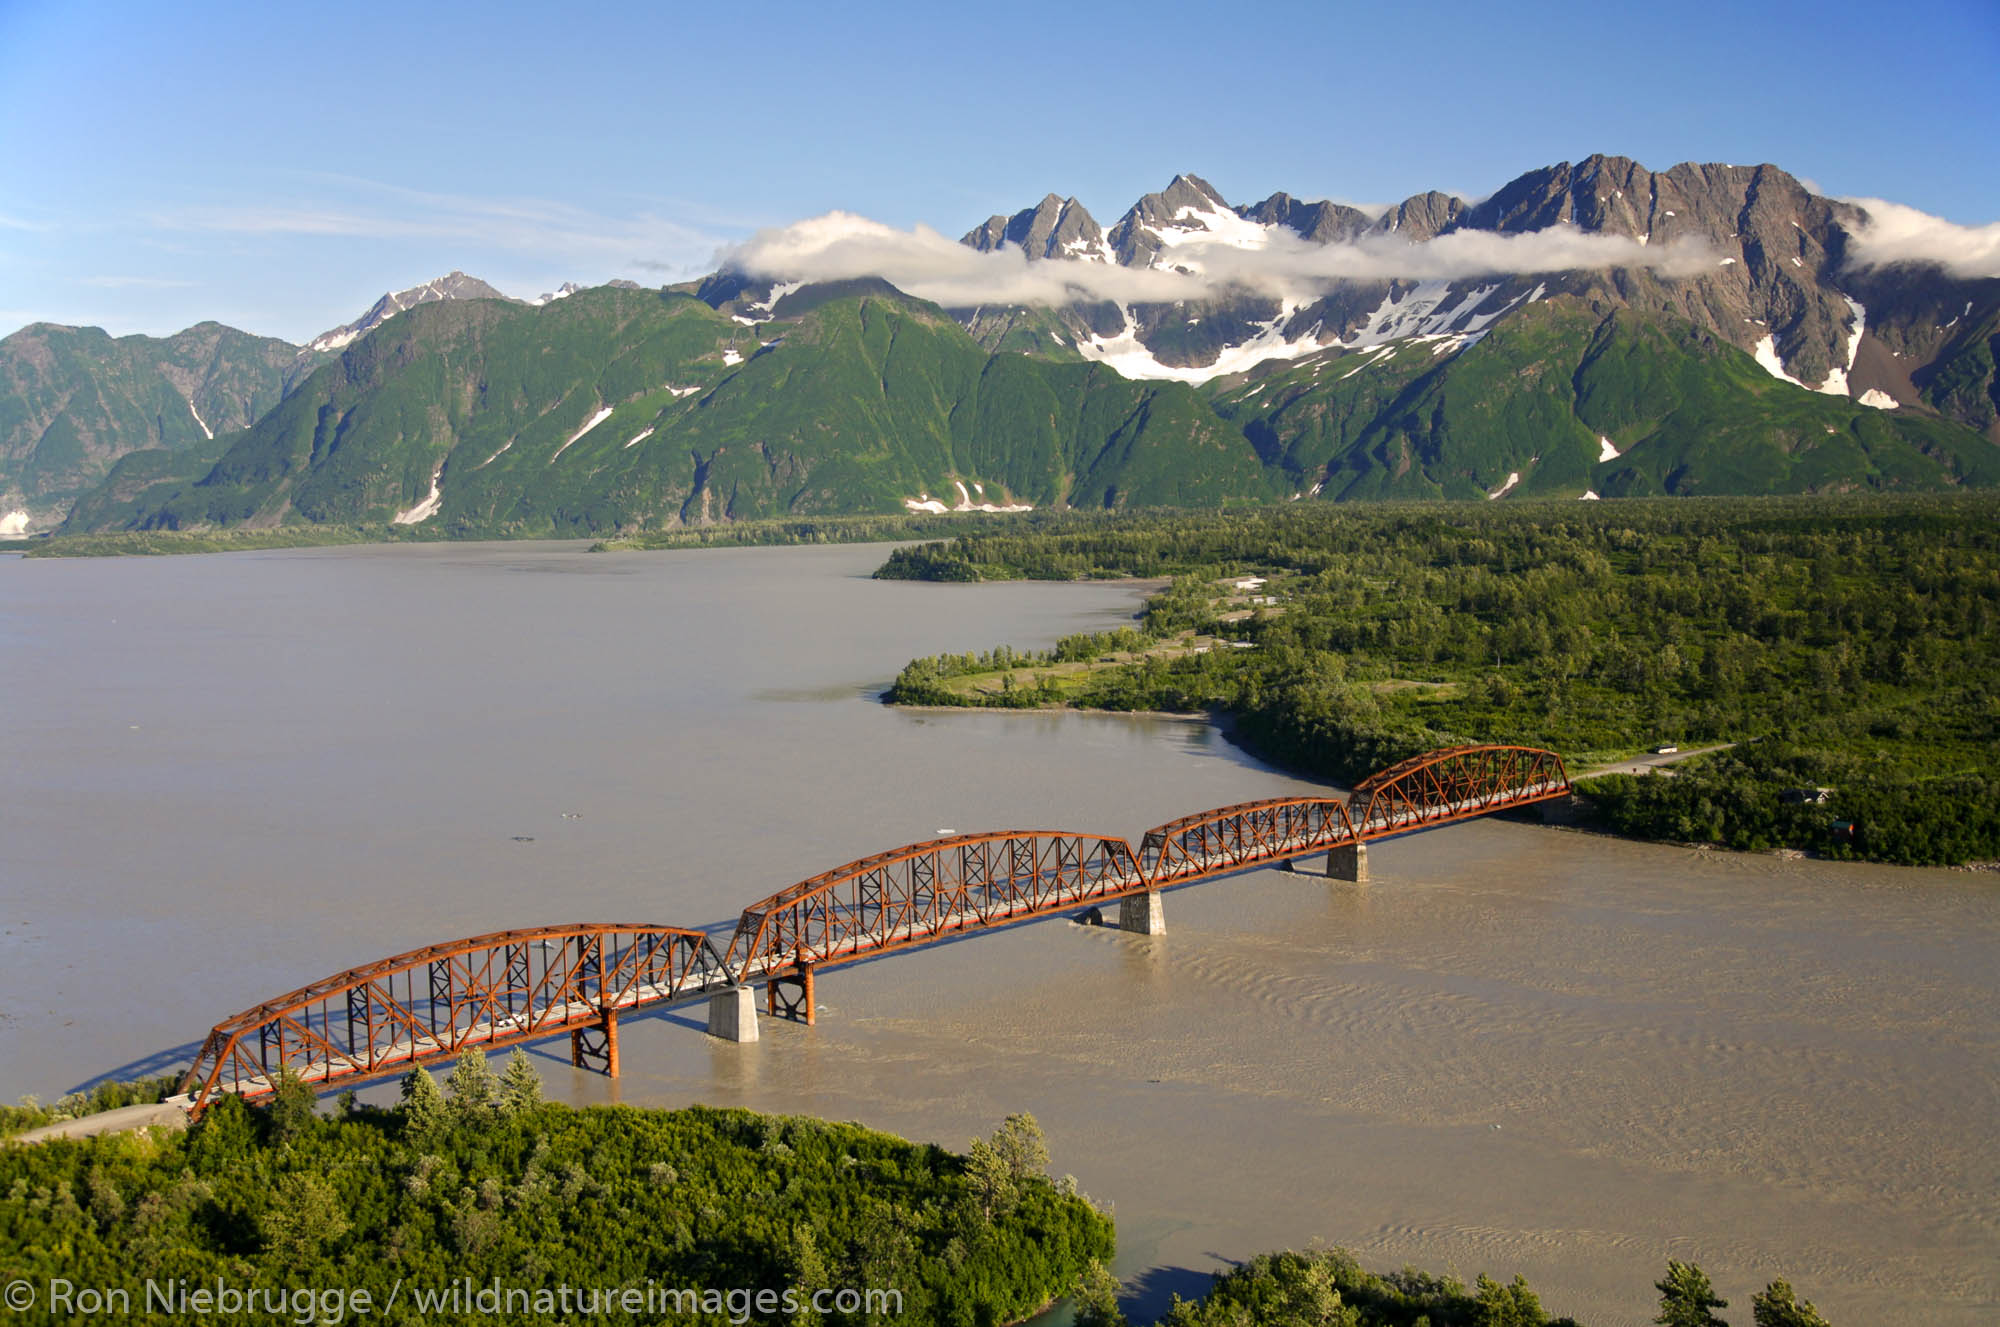 Aerial Million Dollar Bridge crossing the Copper River, Chugach National Forest near Cordova, Alaska.